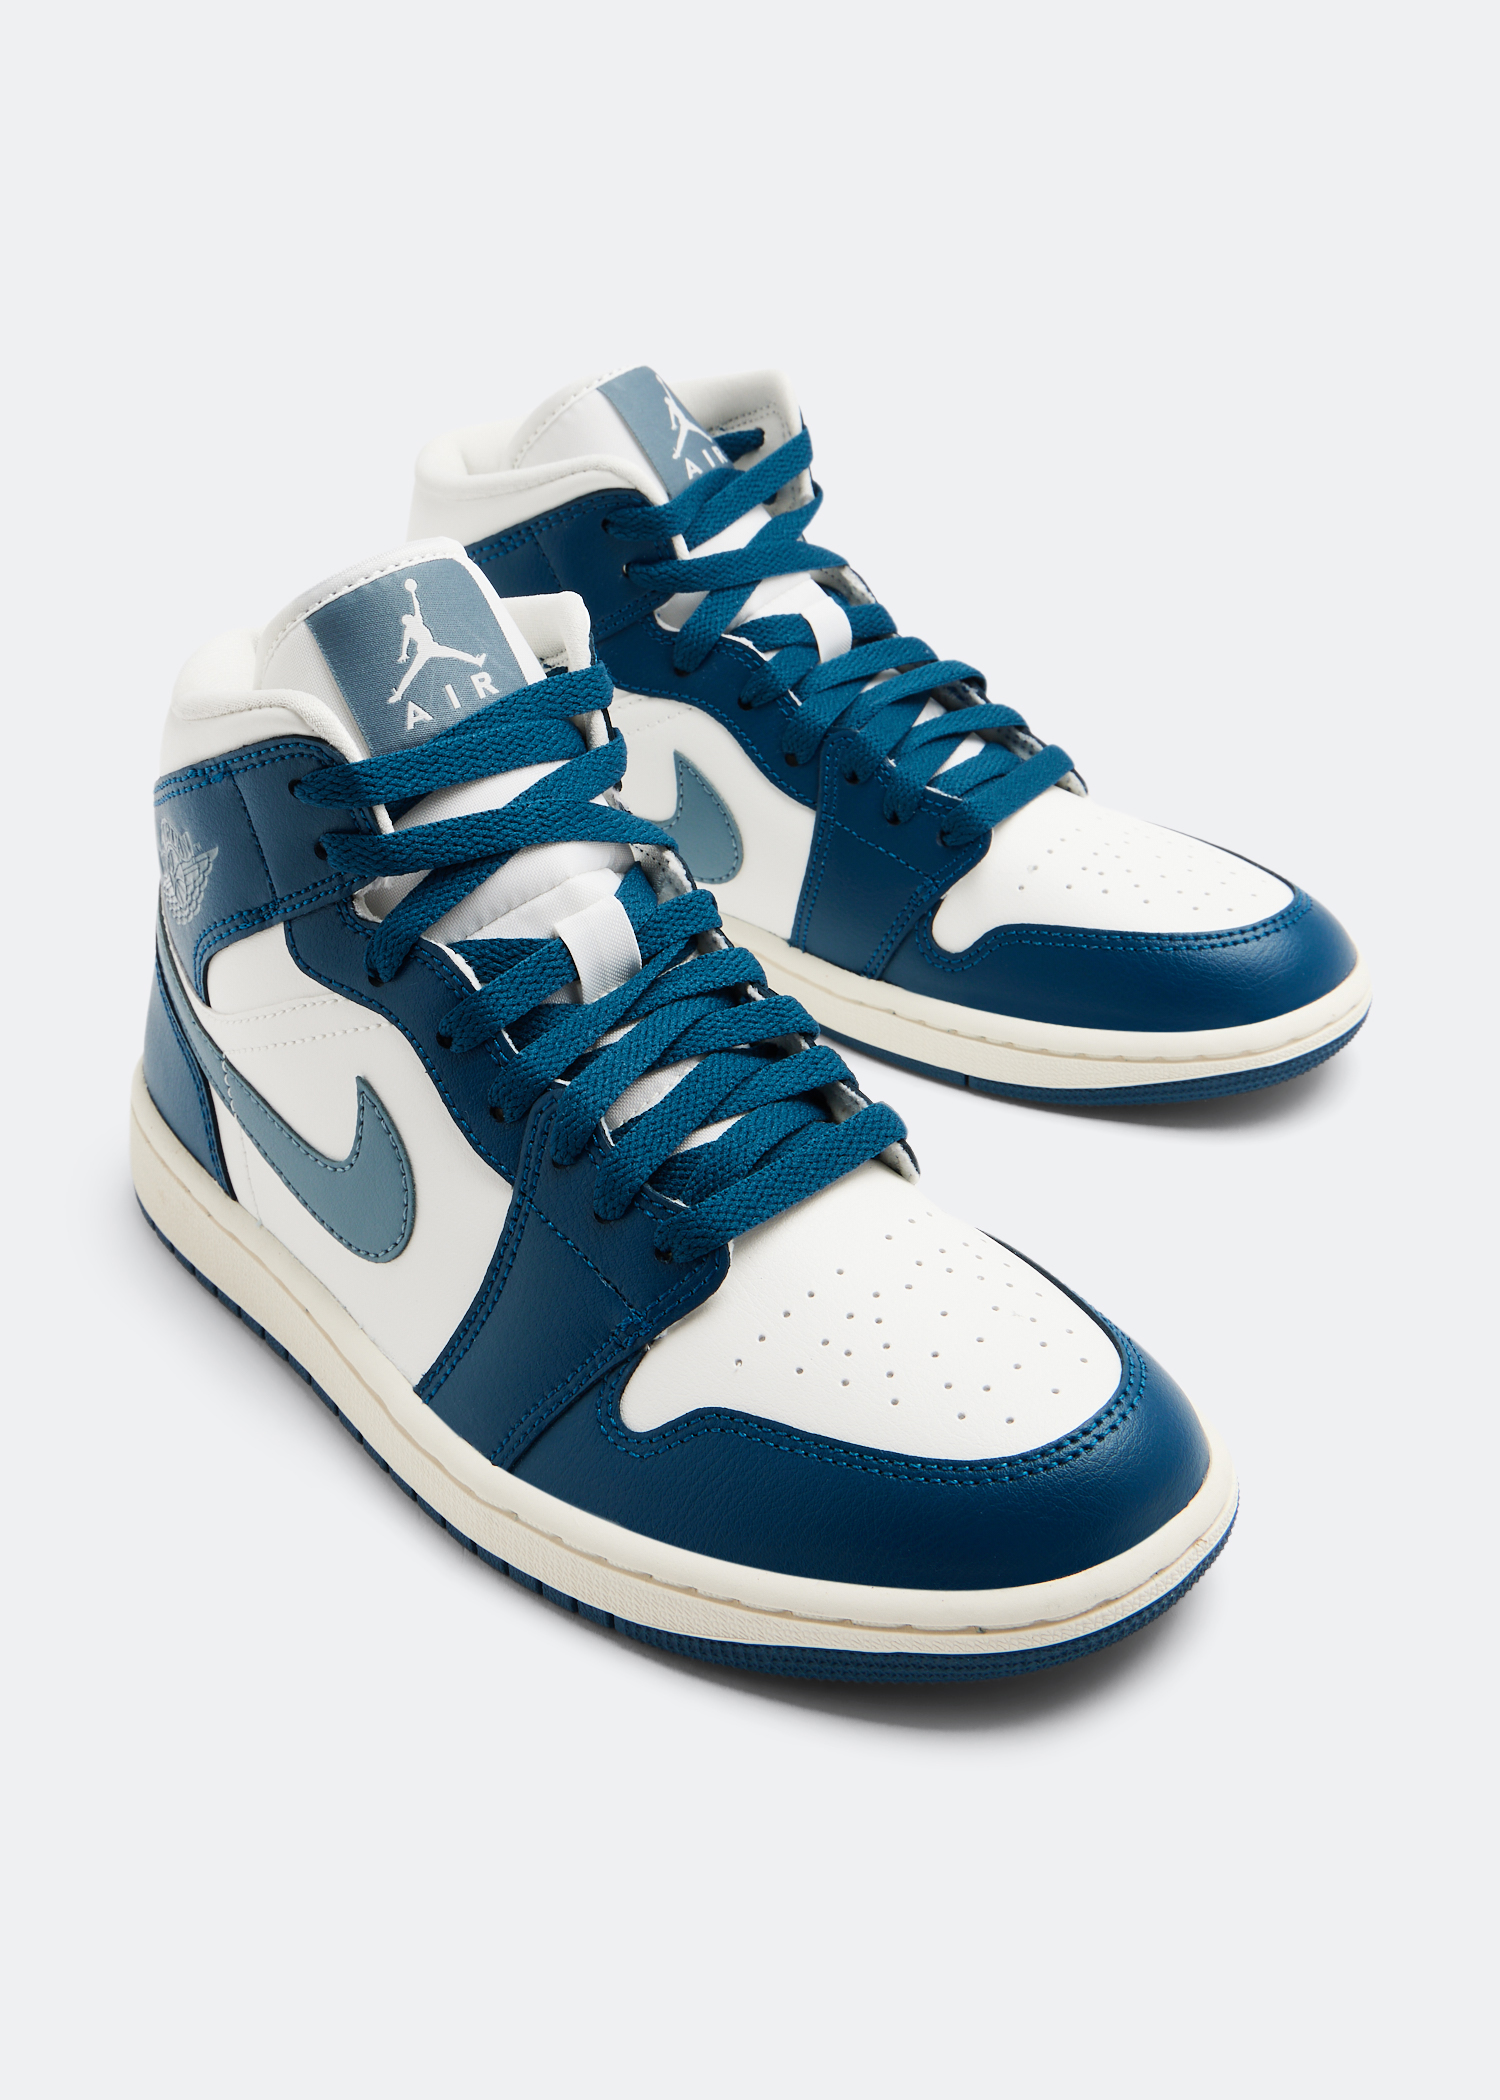 Nike Air Jordan 1 Mid 'Sky J French Blue' sneakers for Women 